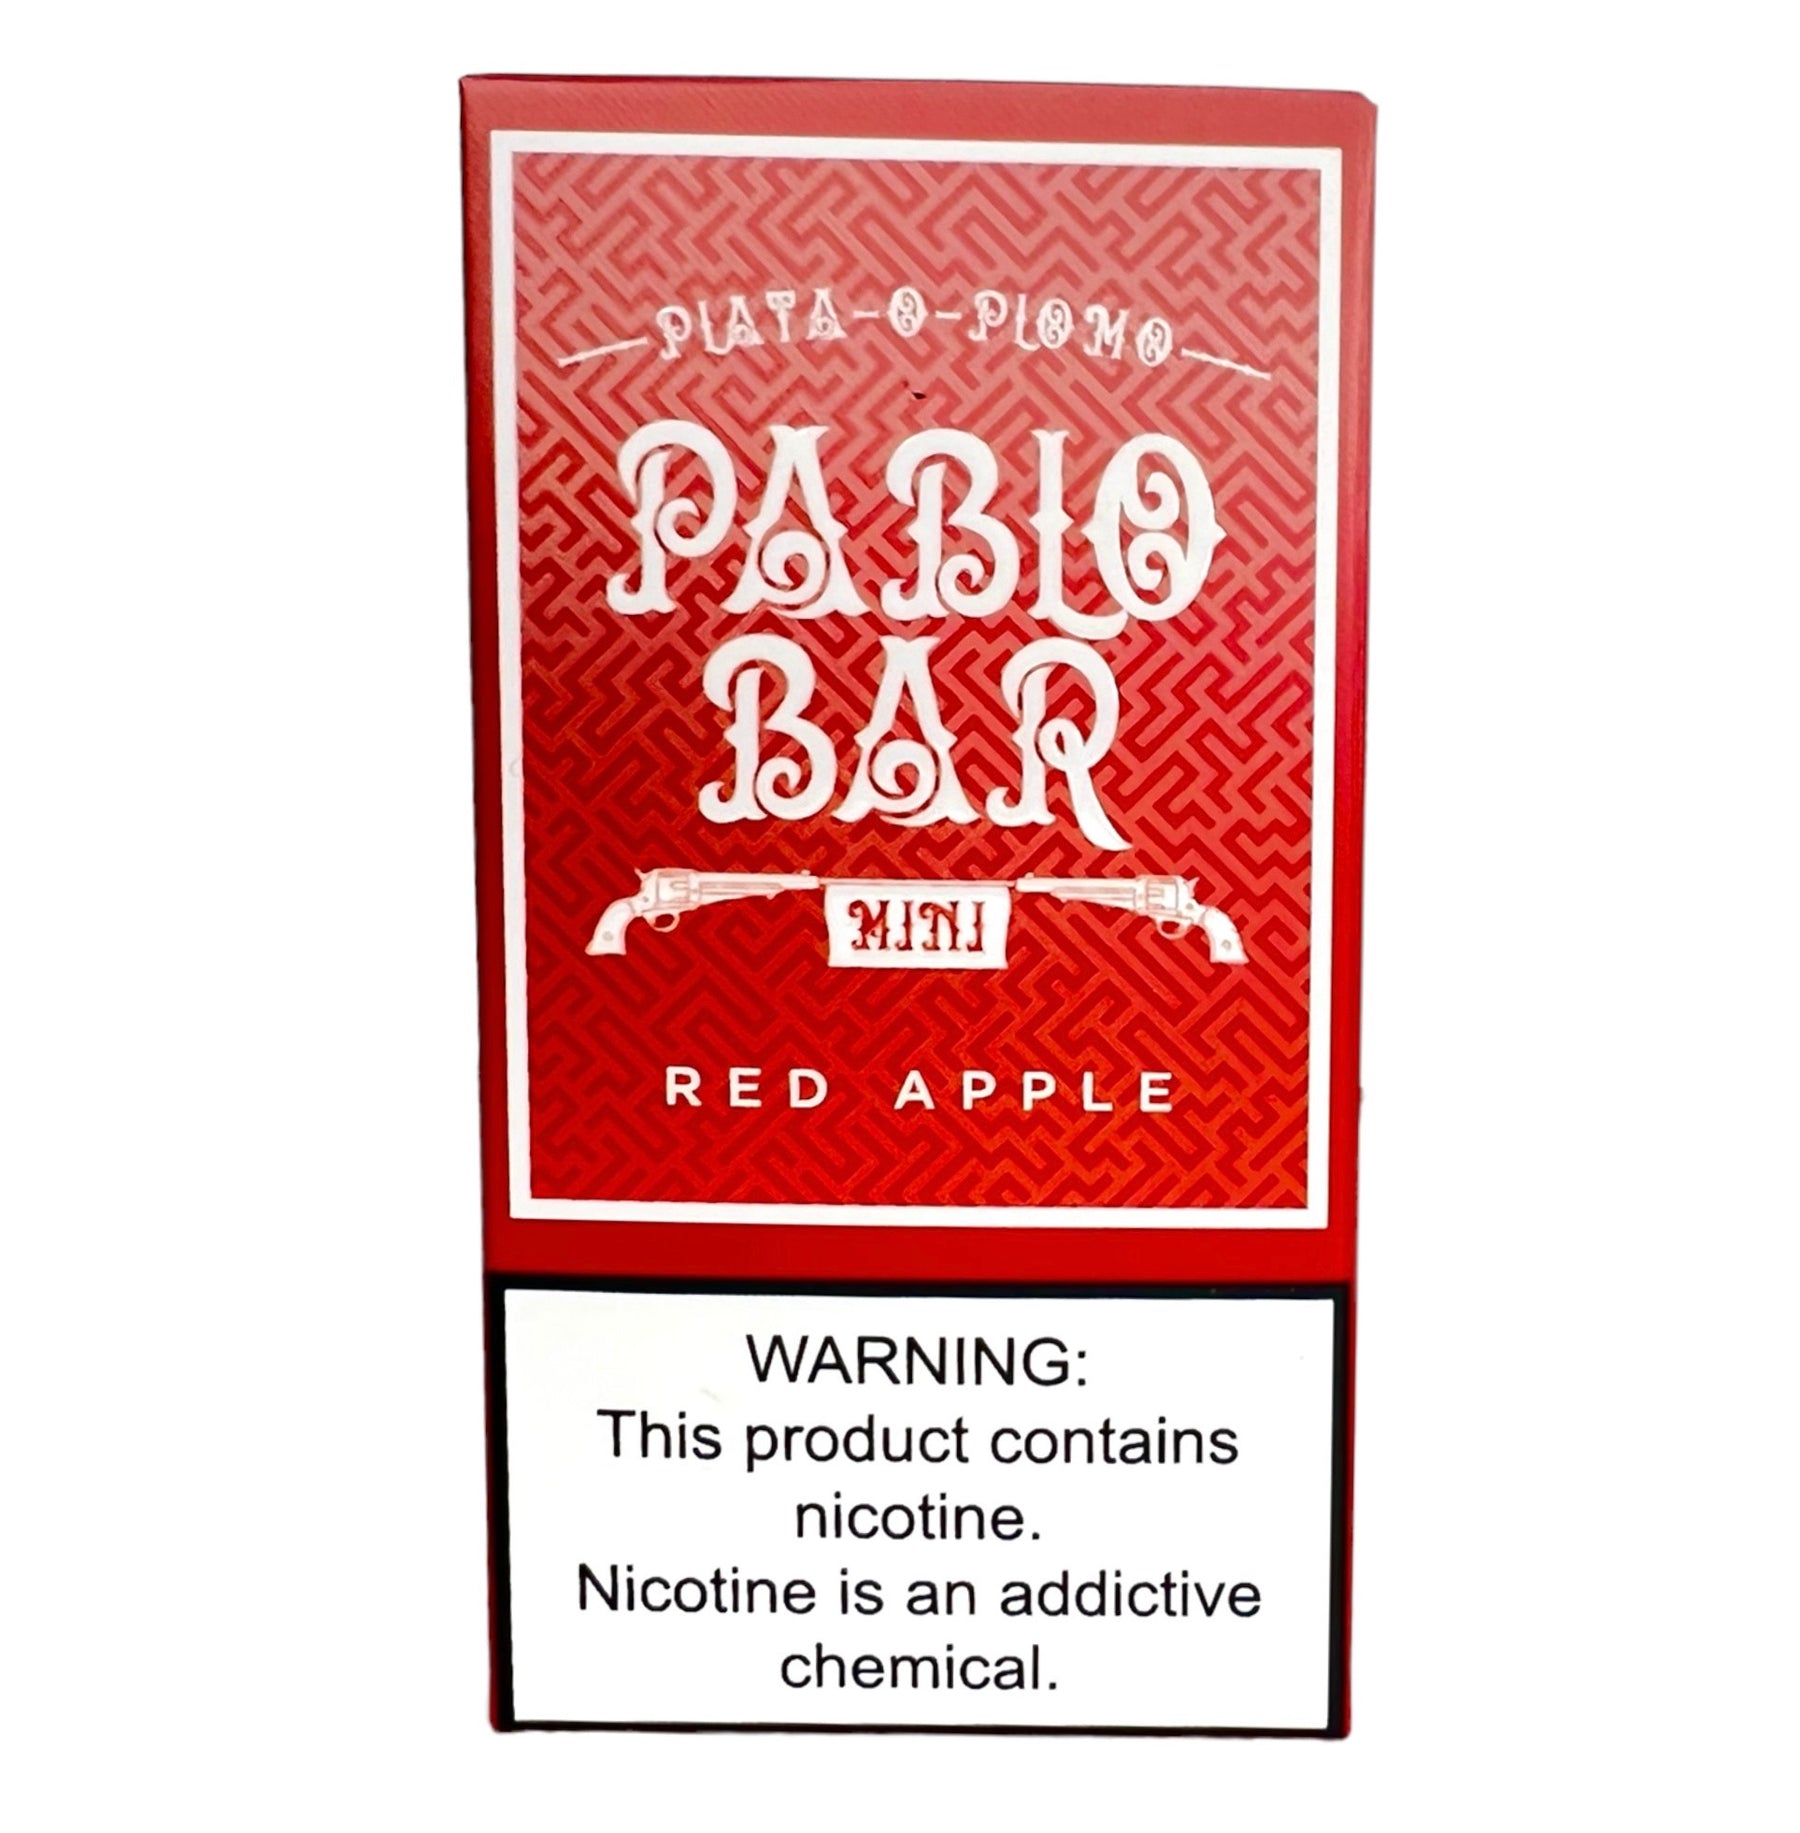 red apple pablo bar